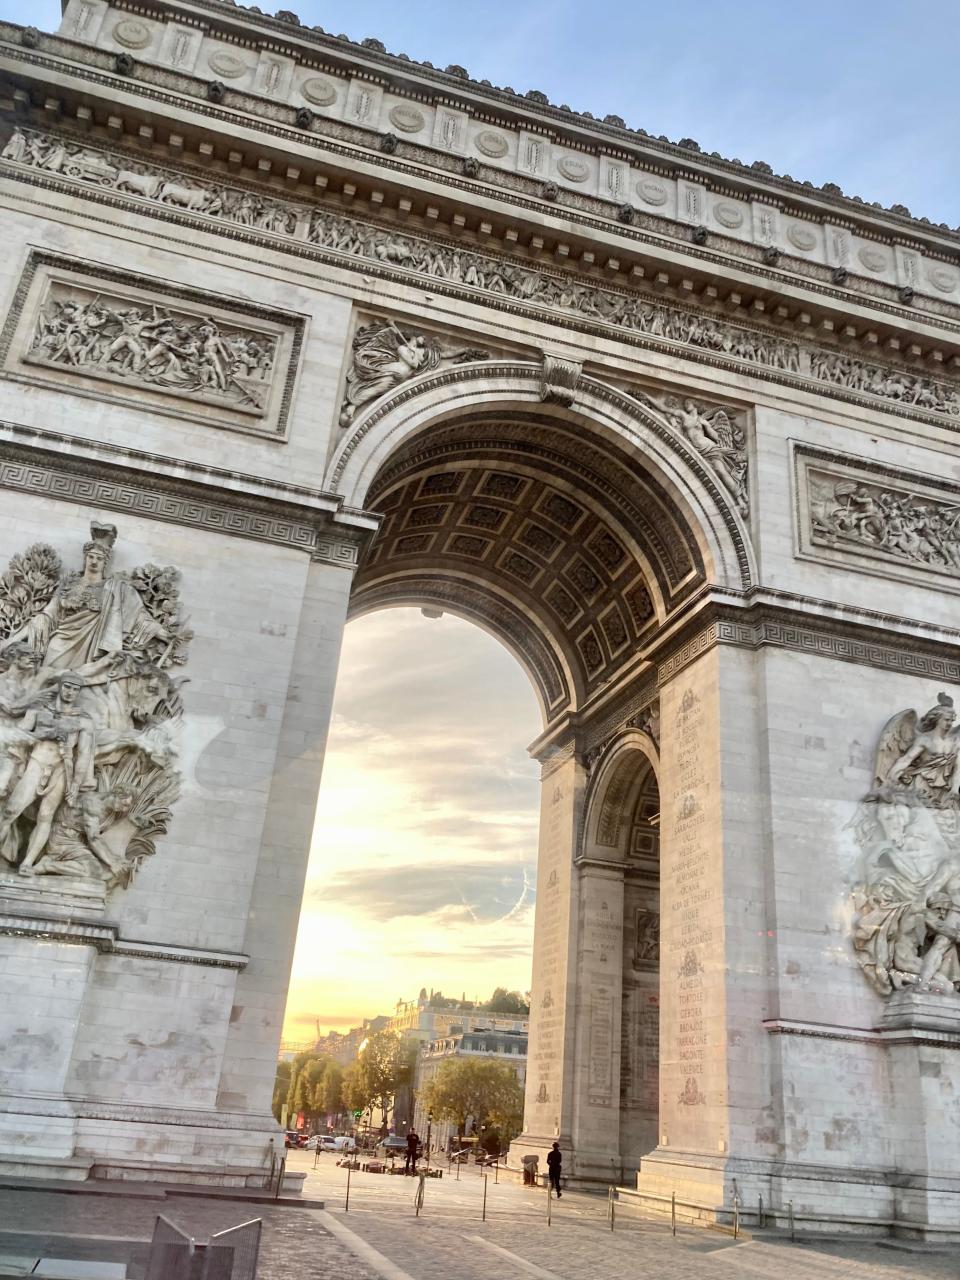 The arc de triomphe as seen on our tour of Paris, the City of Lights.